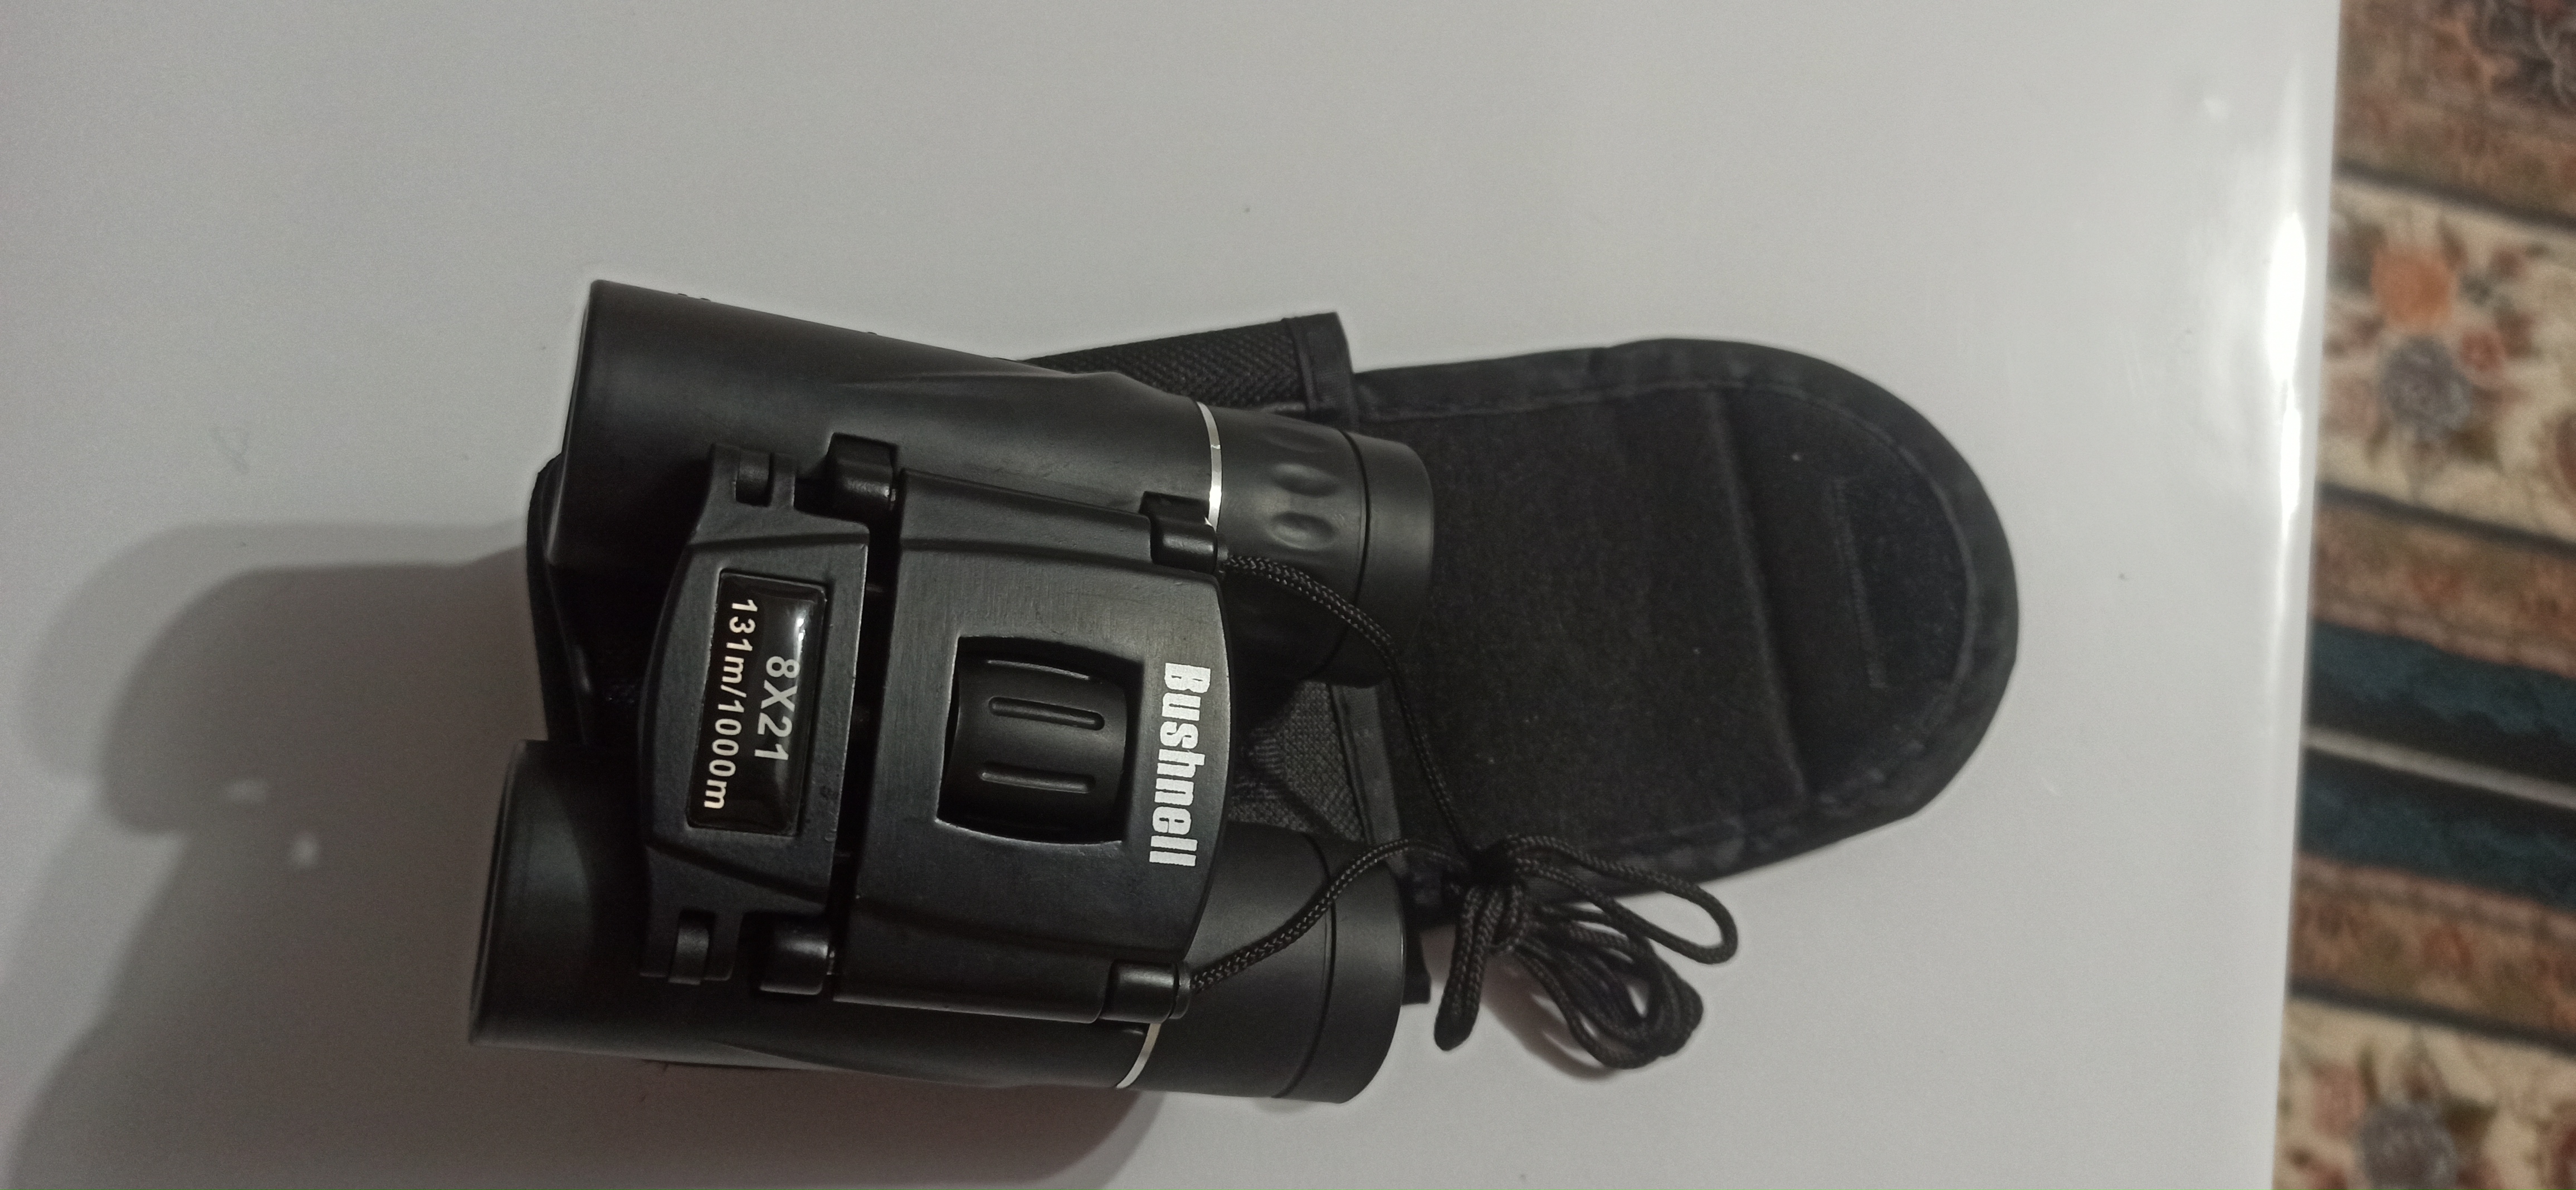 دوربین دوچشمی بوشنل مدل 8X21 POWER